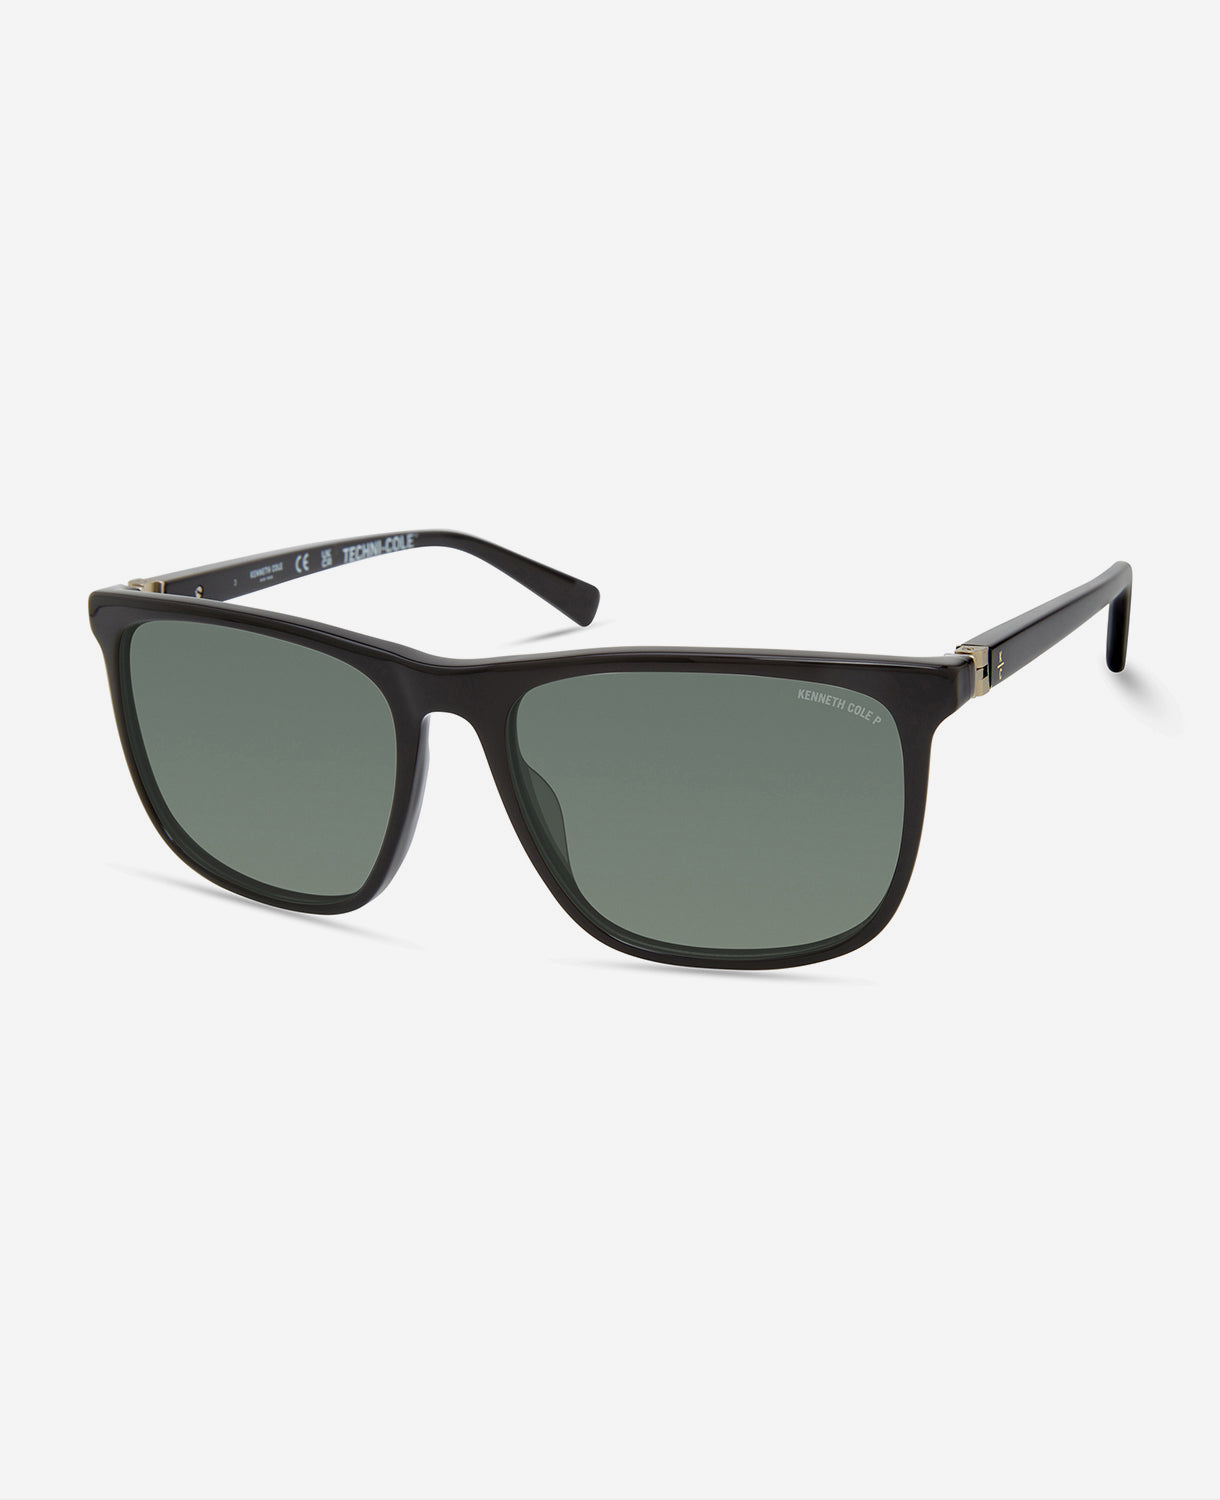 Kenneth Cole Bio-acetate Shiny Solid Black Sunglasses